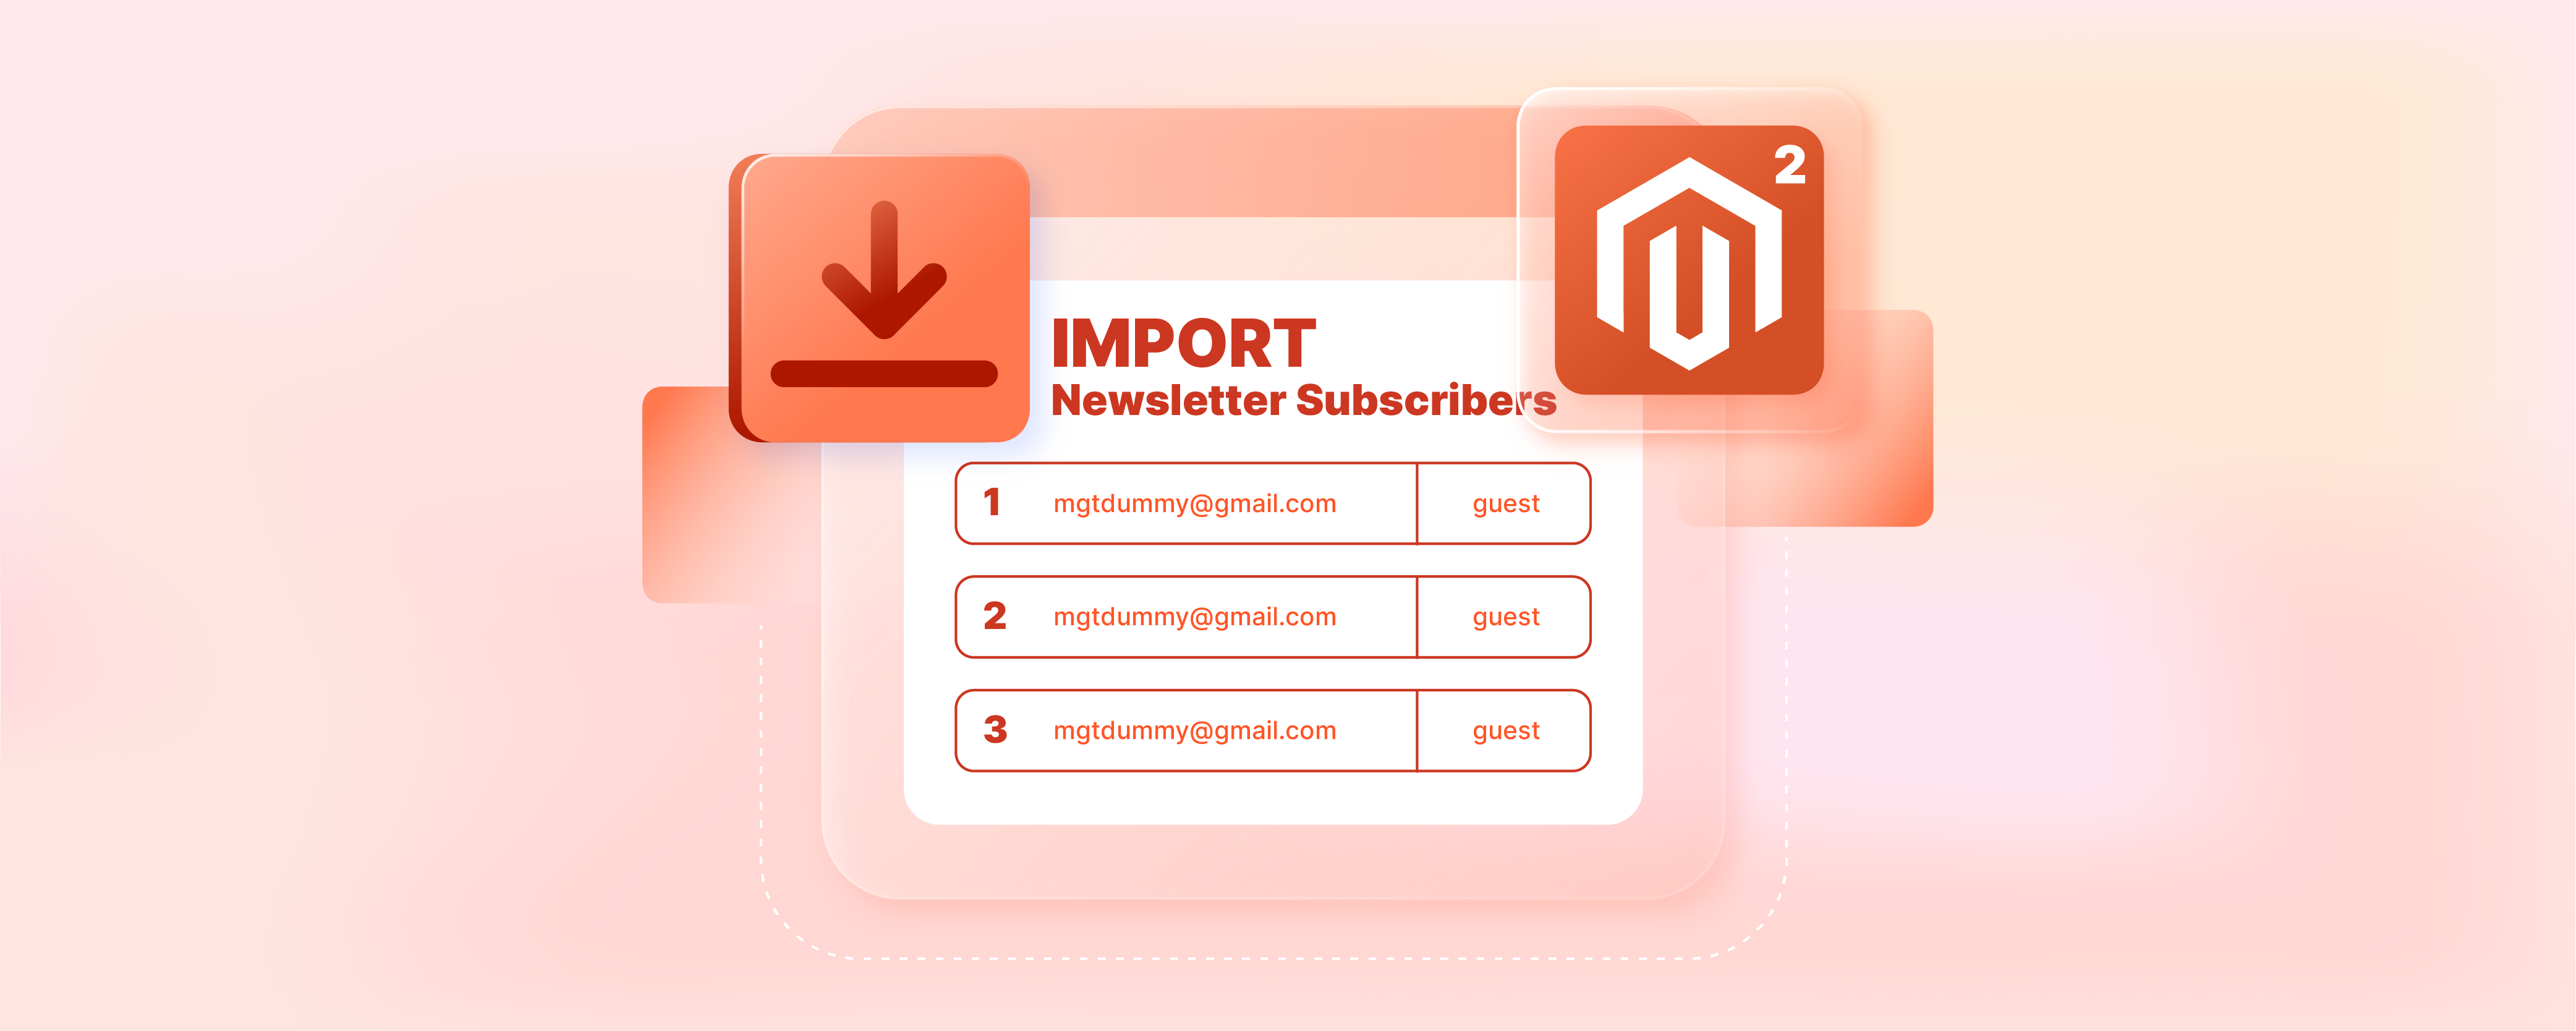 Magento 2 Import Export Newsletter Subscribers